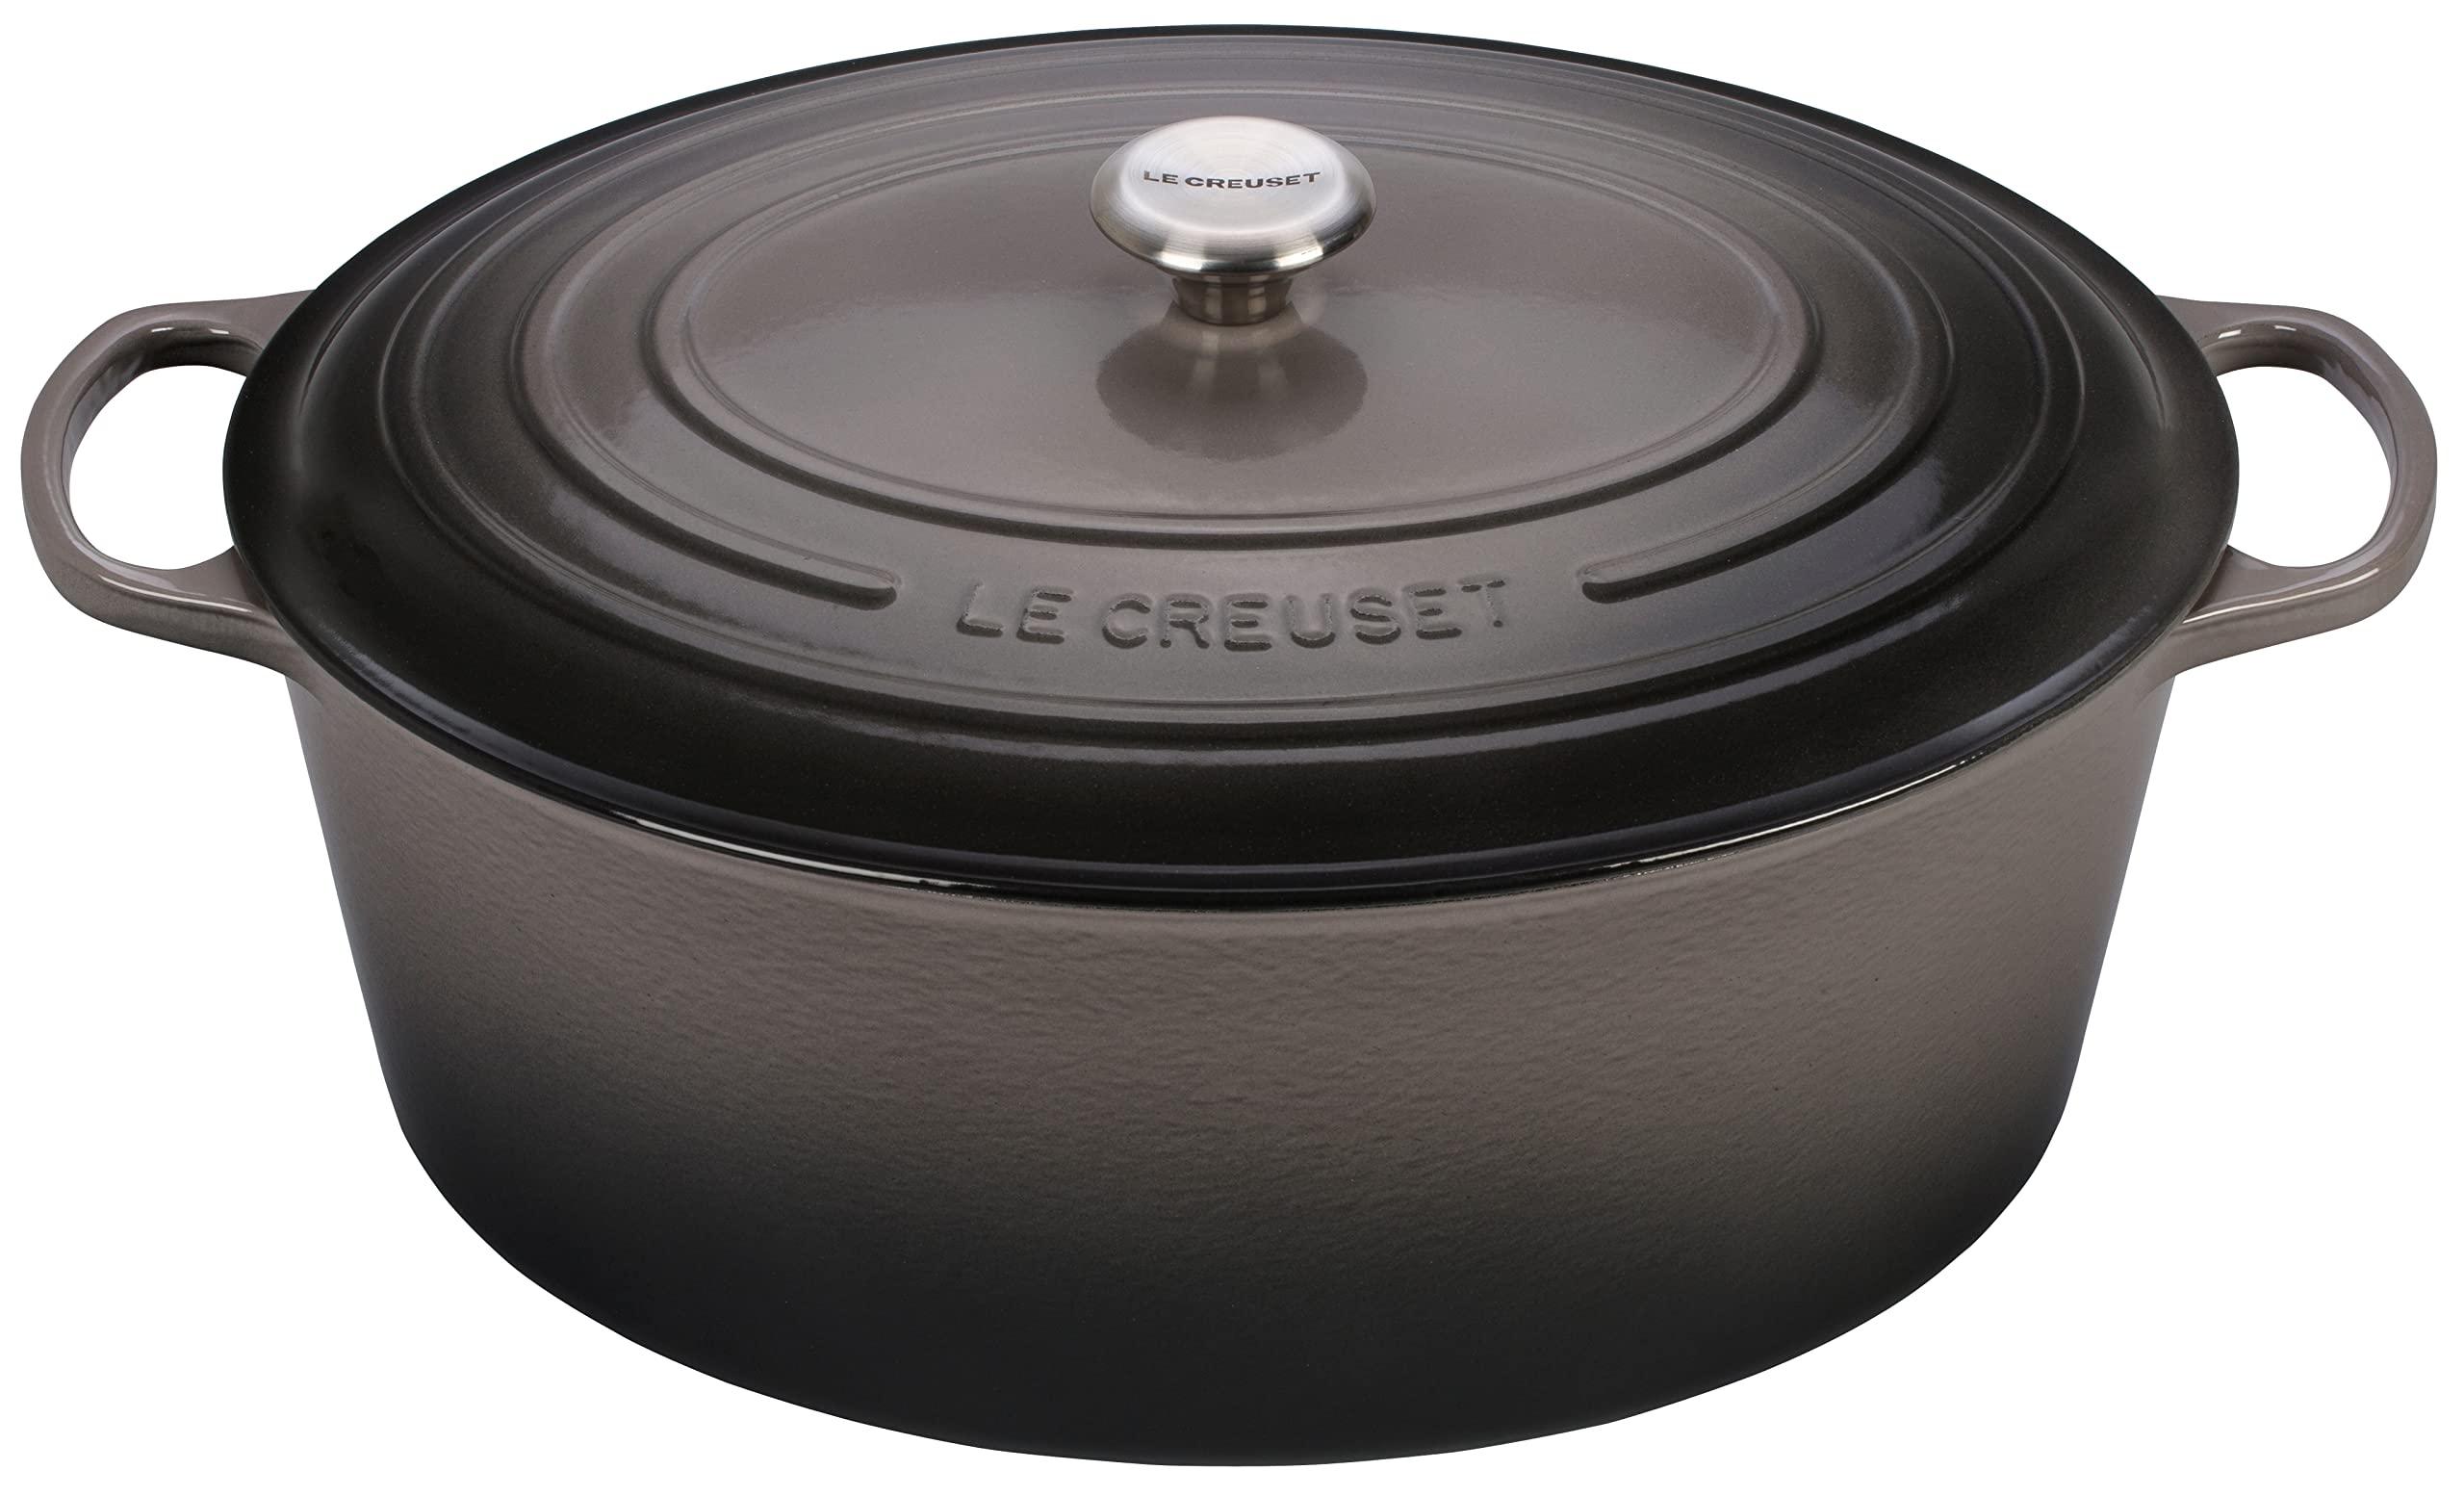  Le Creuset Enameled Cast Iron Signature Oval Dutch Oven, 15.5  qt., Oyster: Home & Kitchen